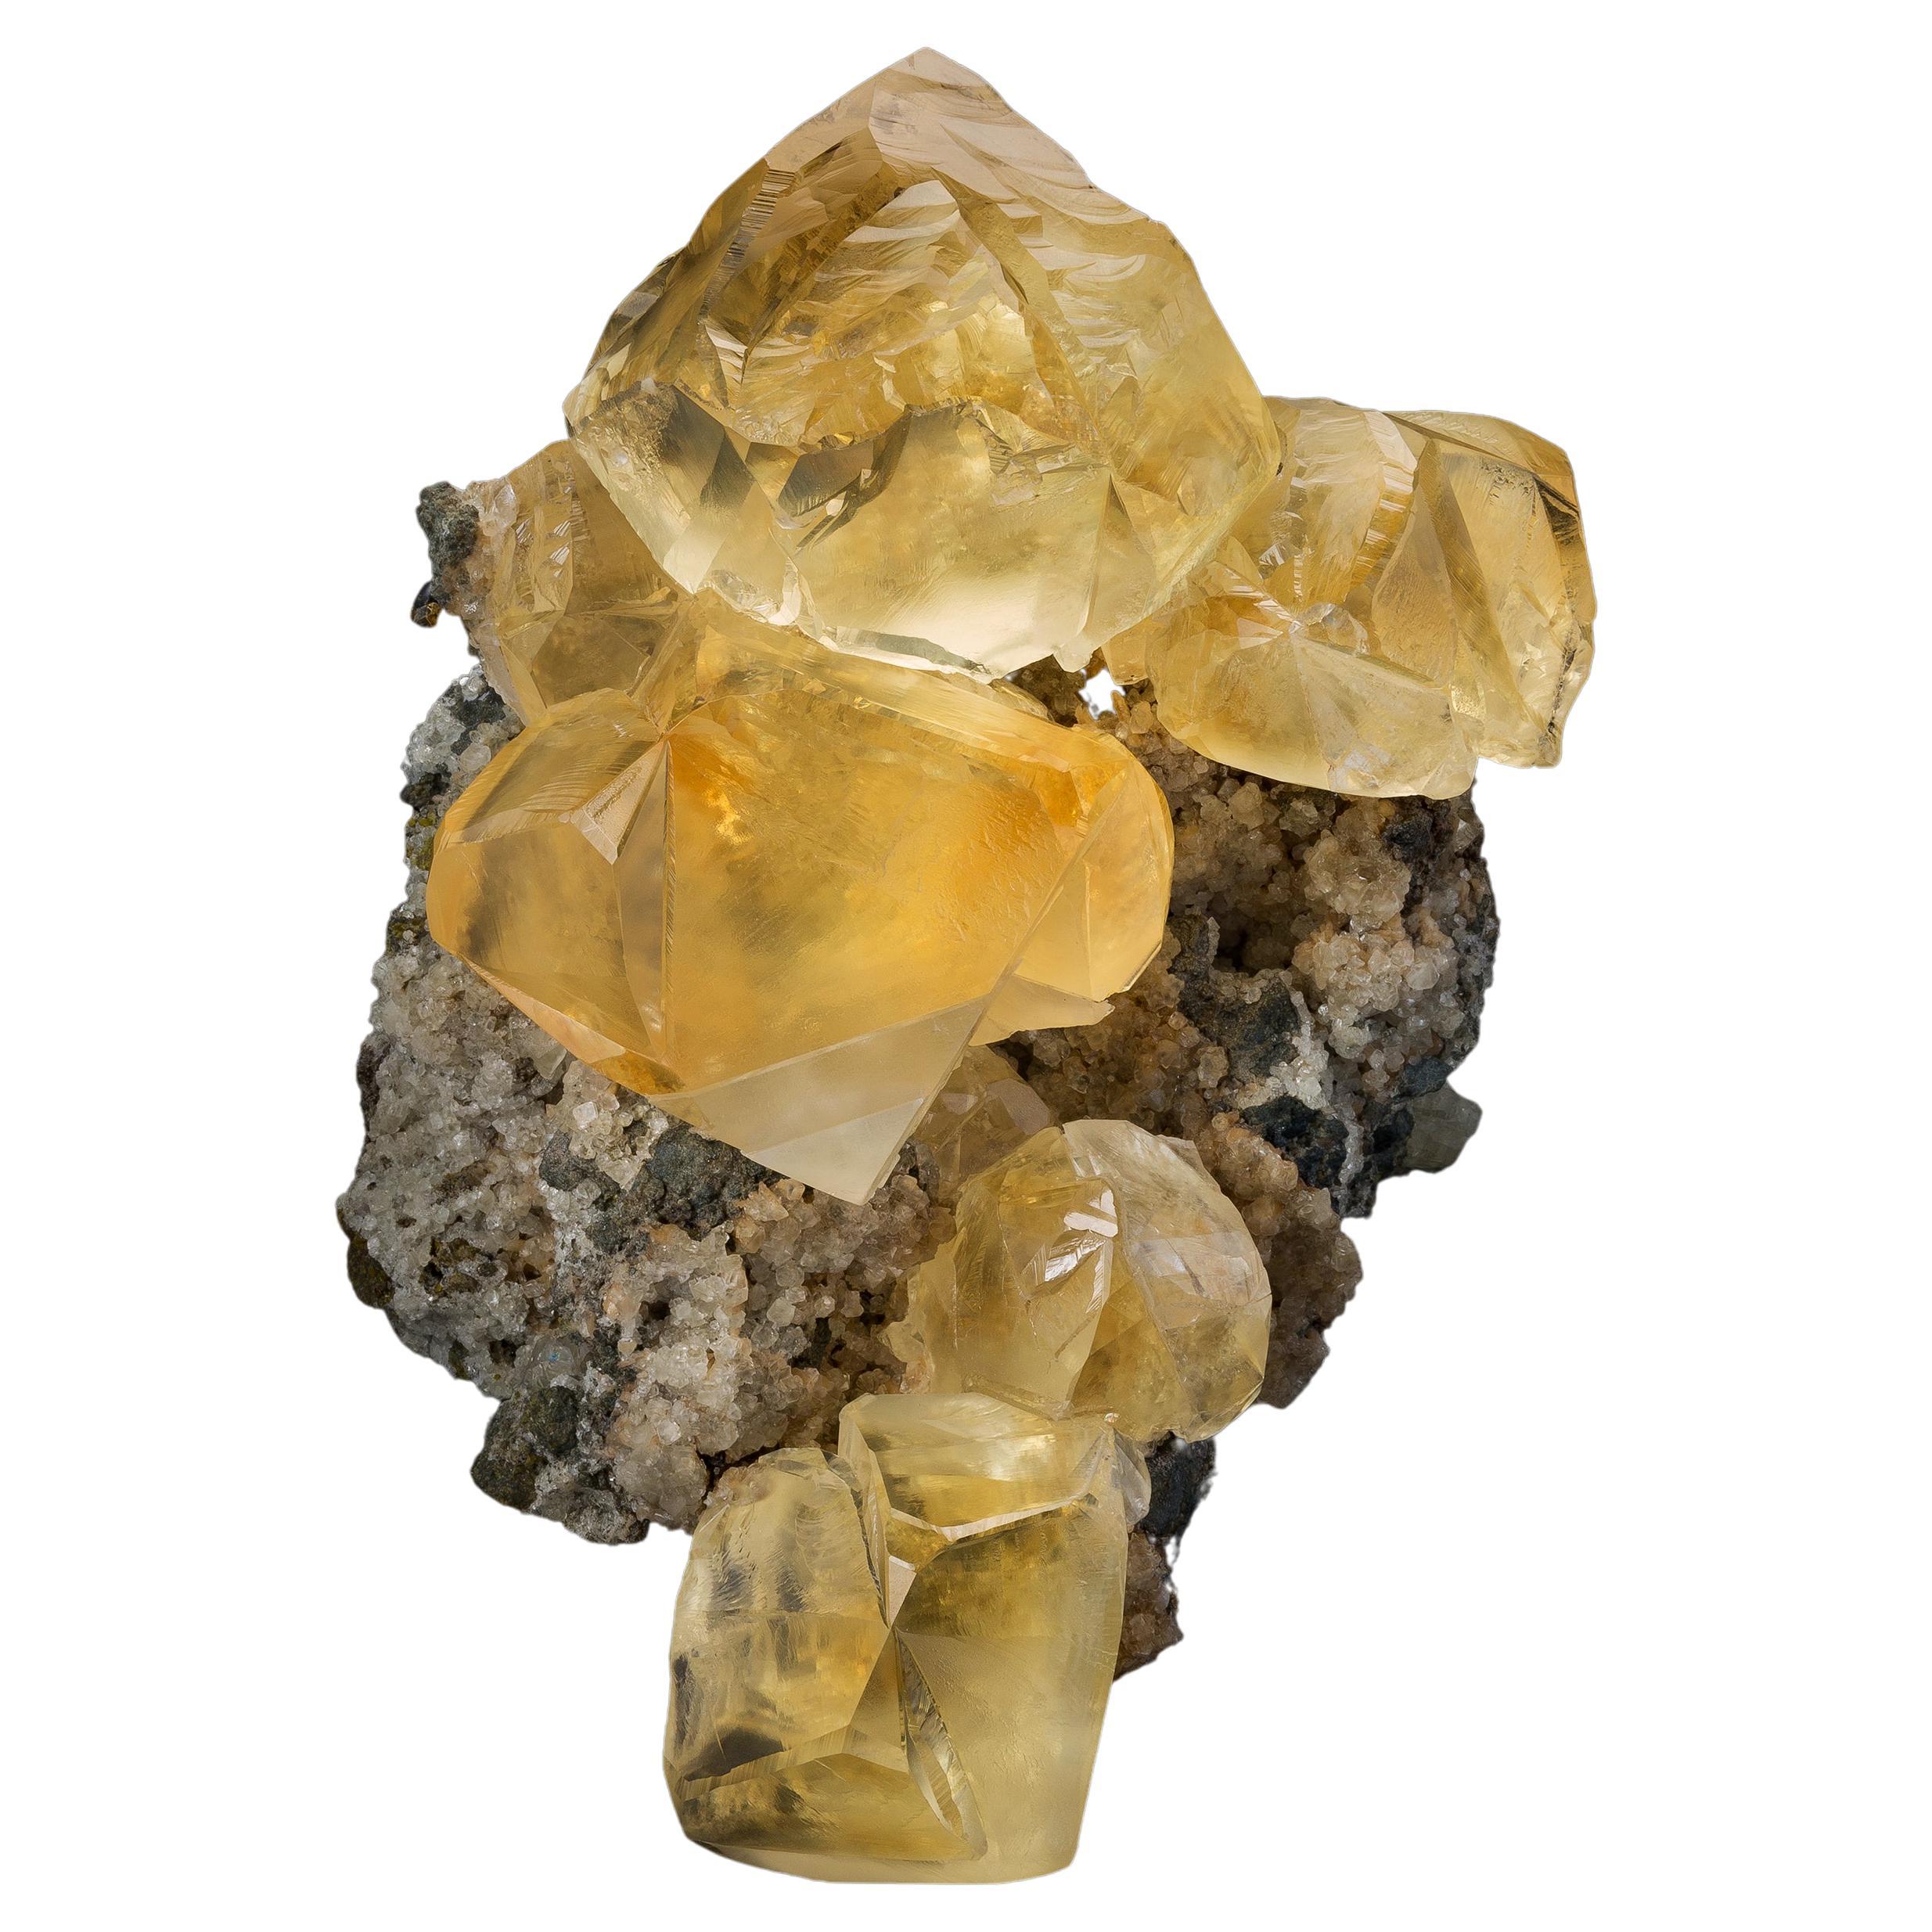 Canary Yellow Calcite Mineral Specimen – Rudny, Kazakhstan